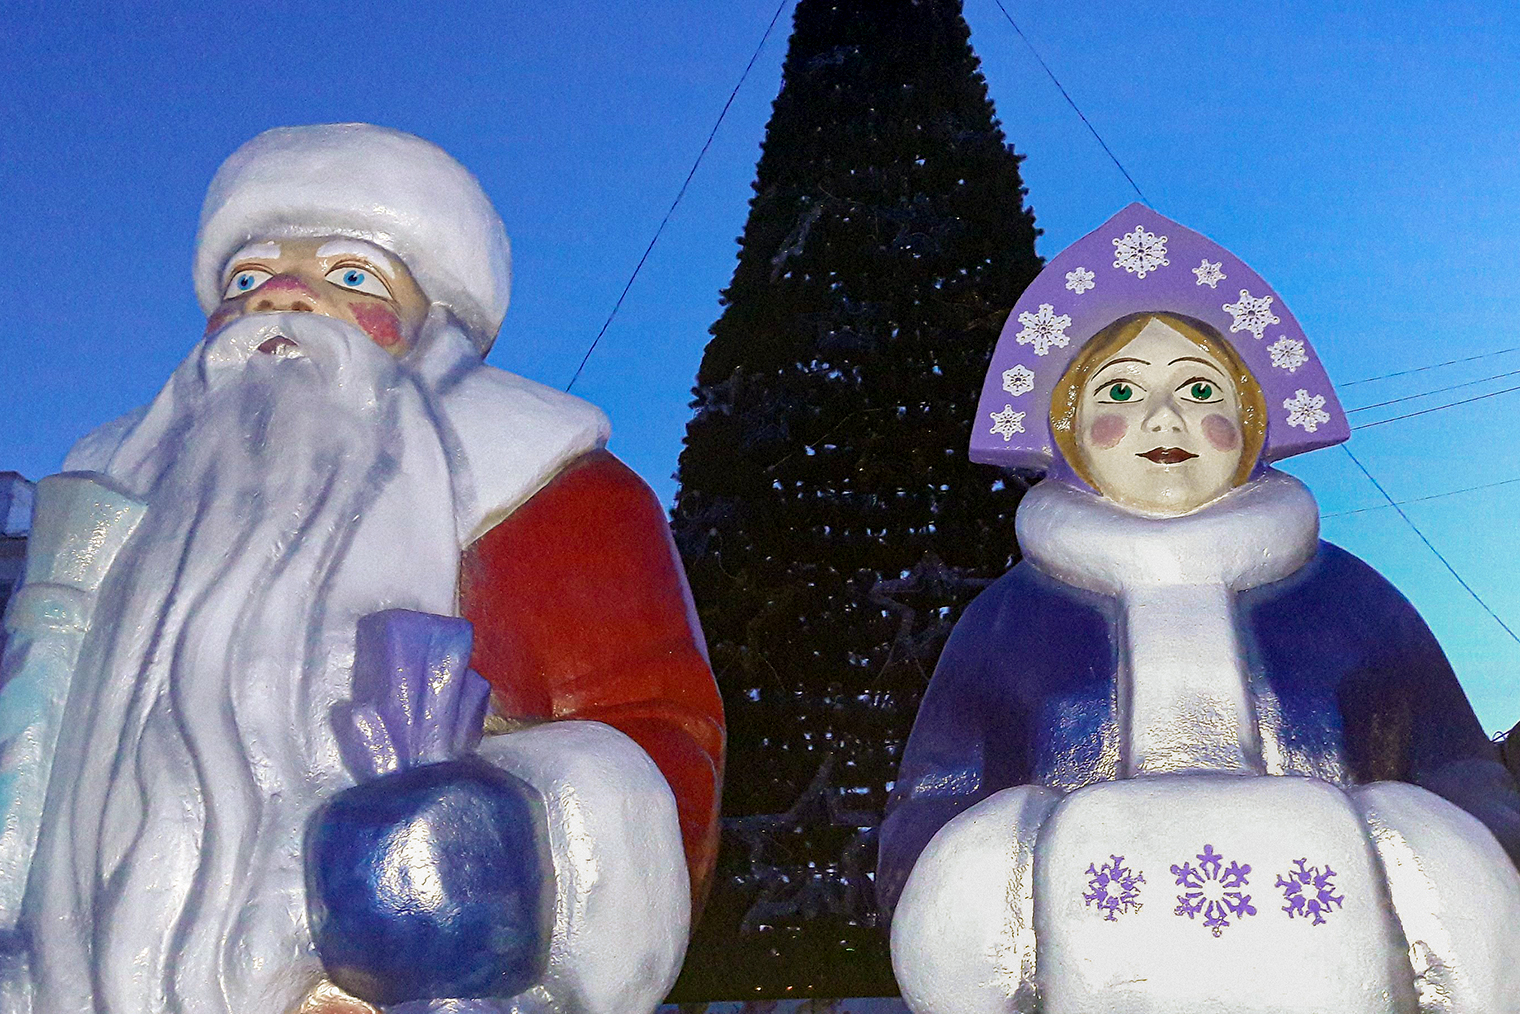 Дед Мороз со Снегурочкой с главной городской елки. Суровое детство — закаленные люди